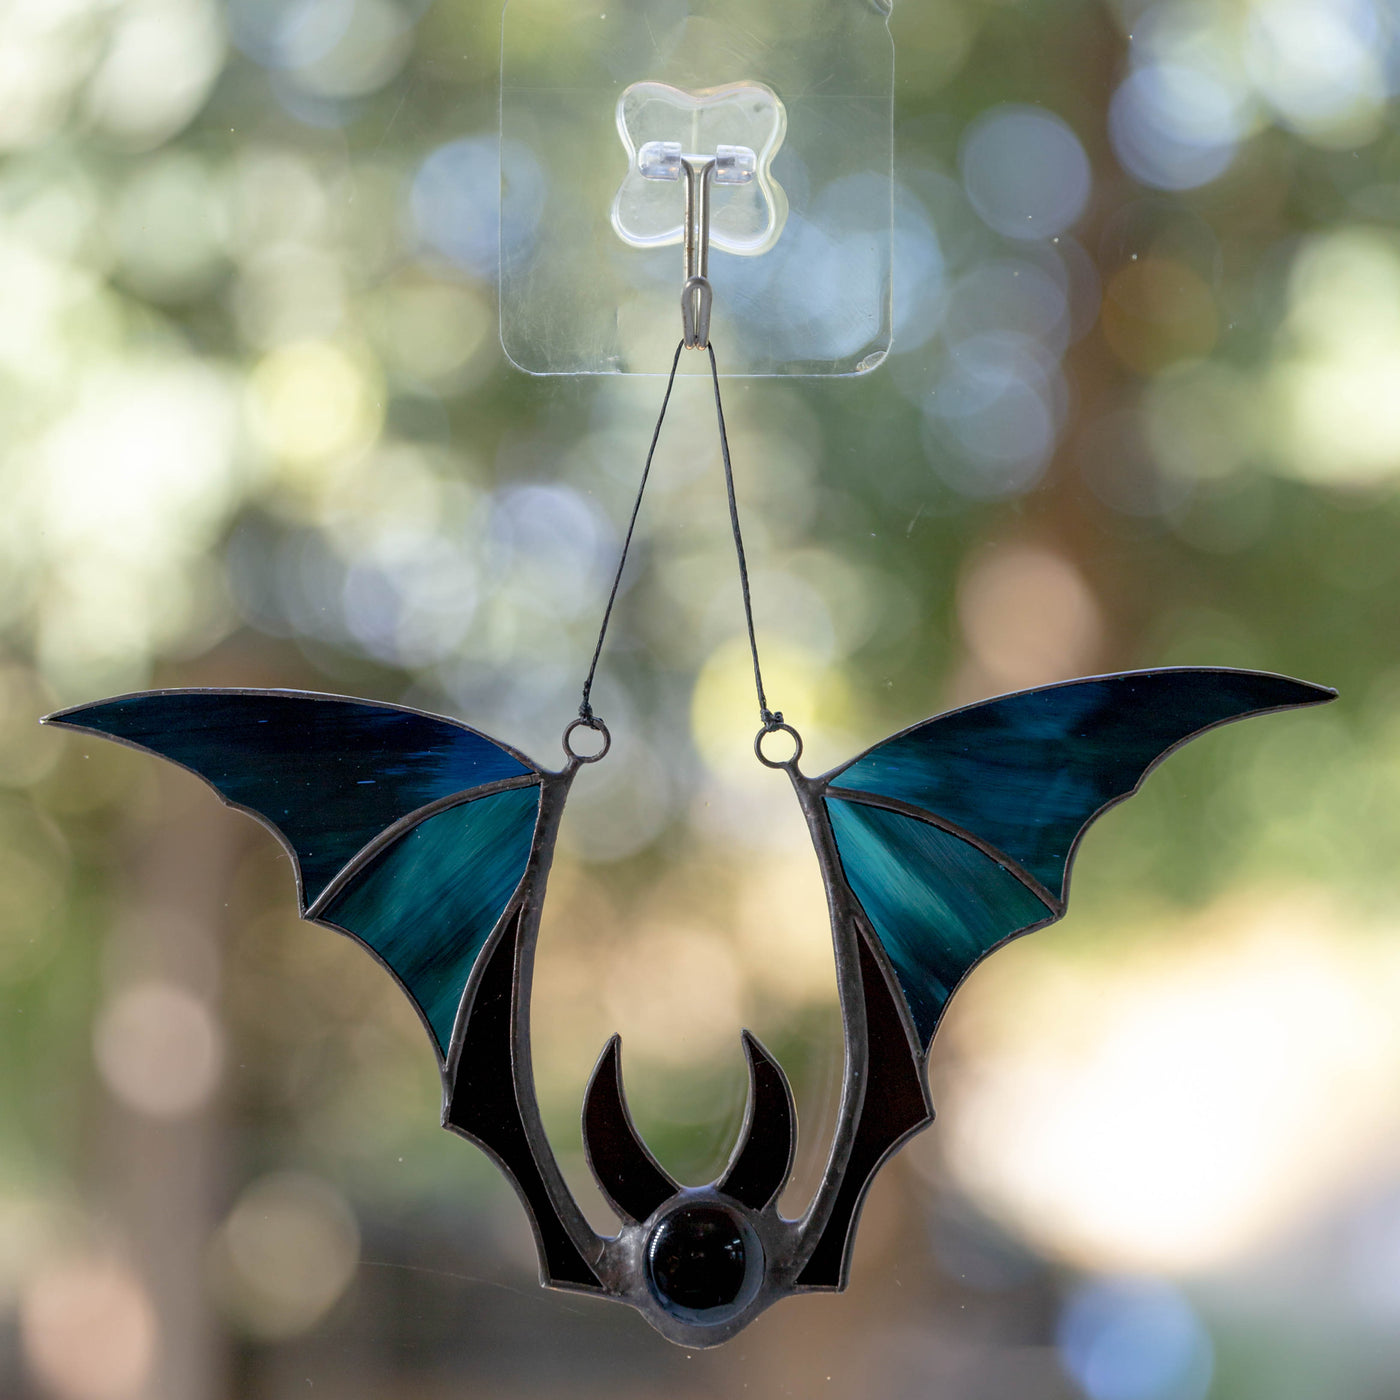 Blue bat Halloween suncatcher for spooky decoration